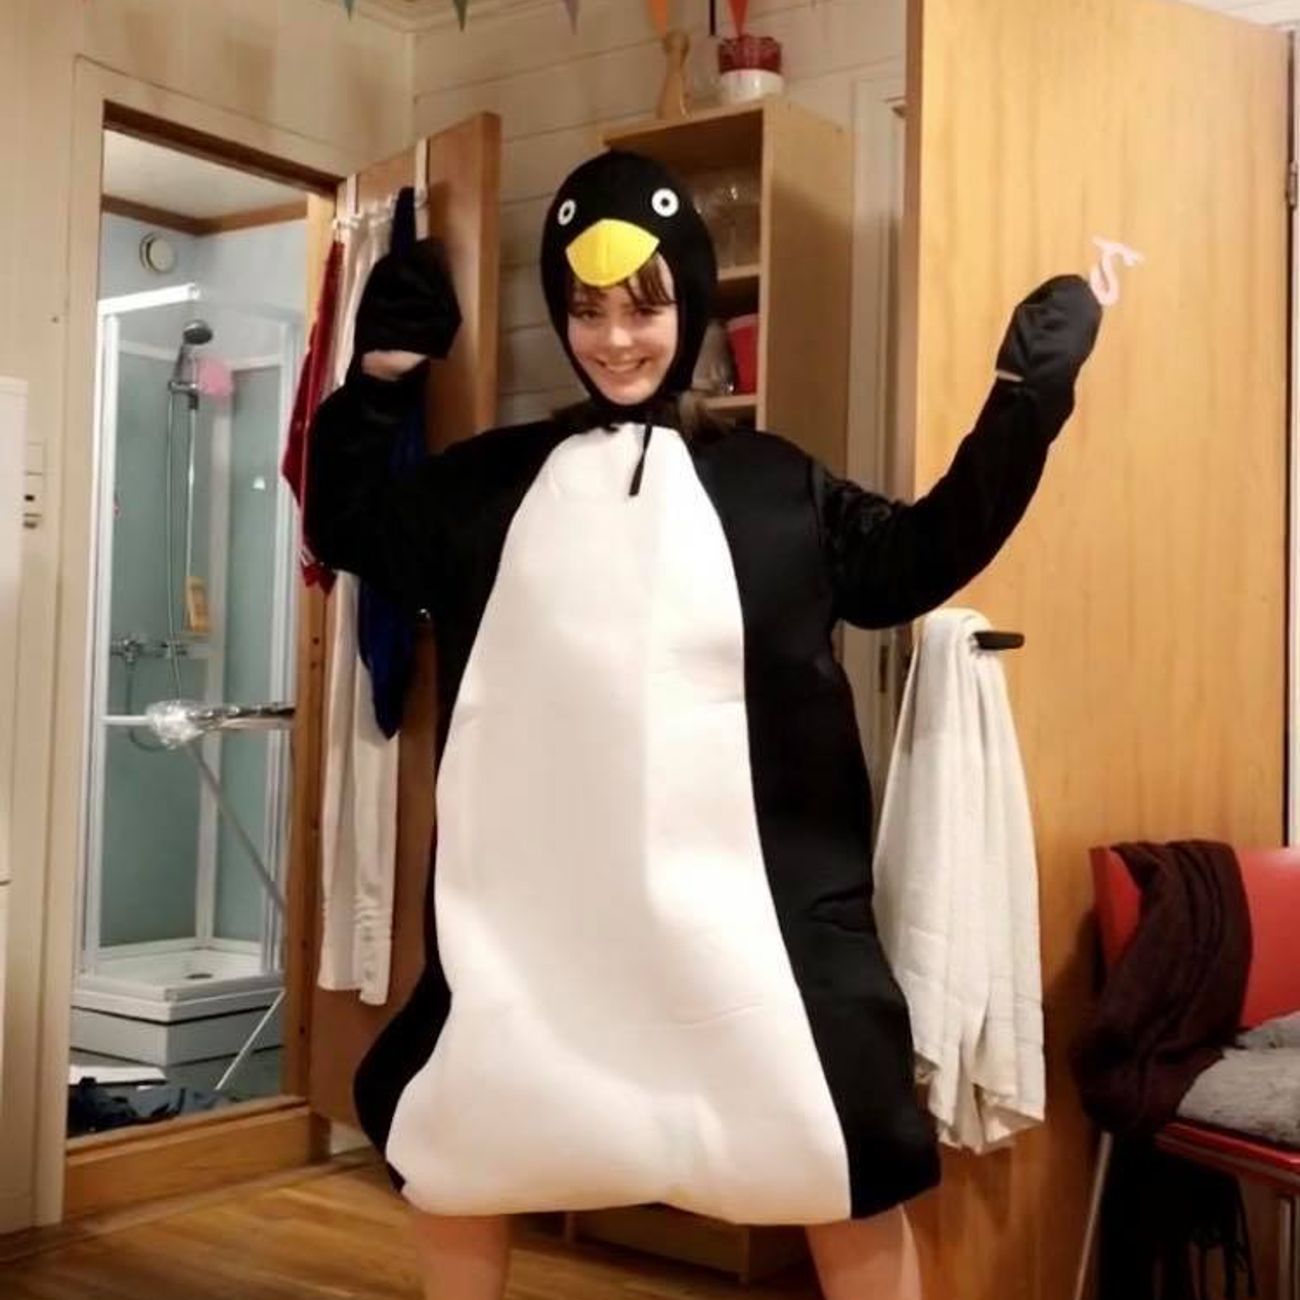 kb-pingvin-budget-karnevalsdrakt-1